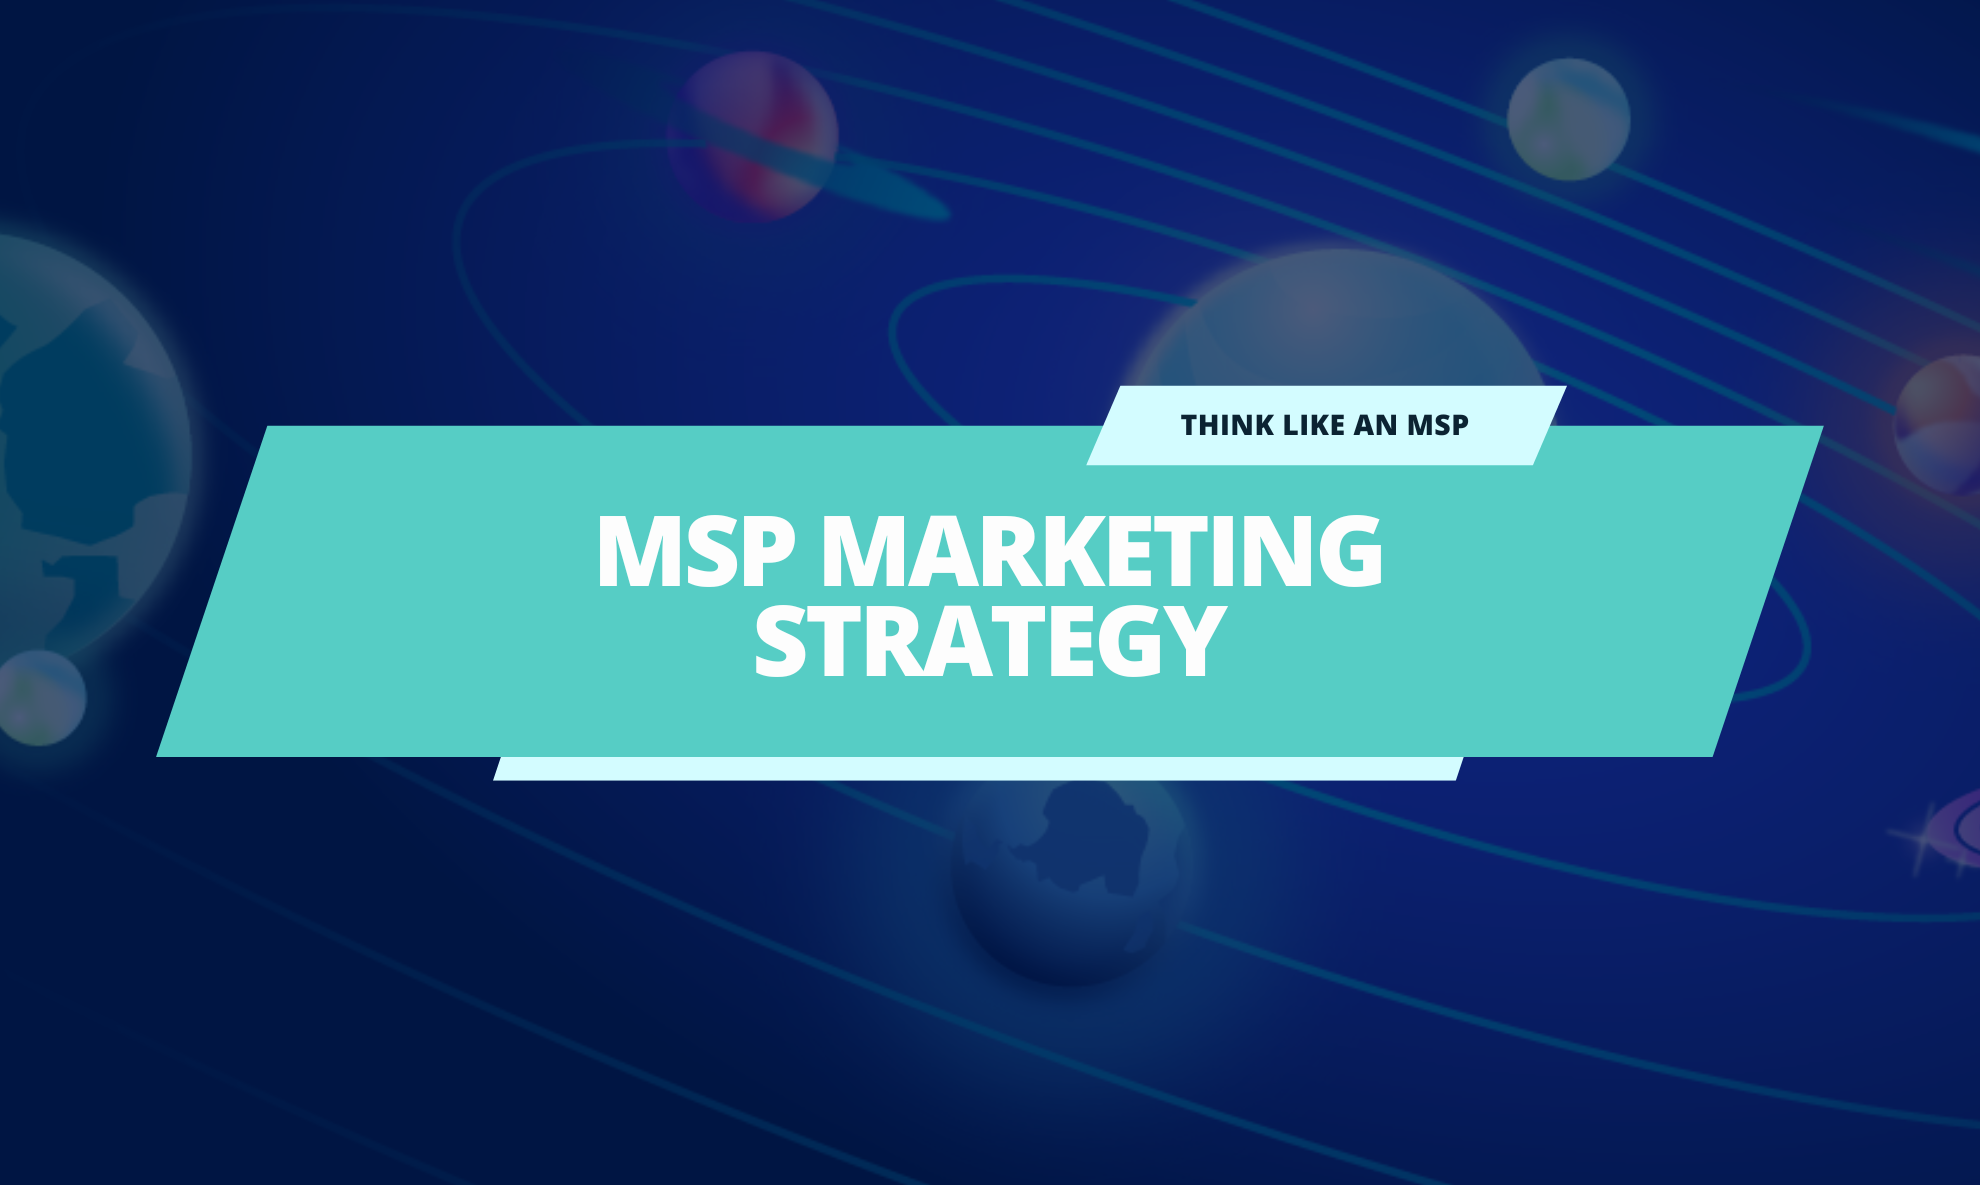 msp marketing strategry